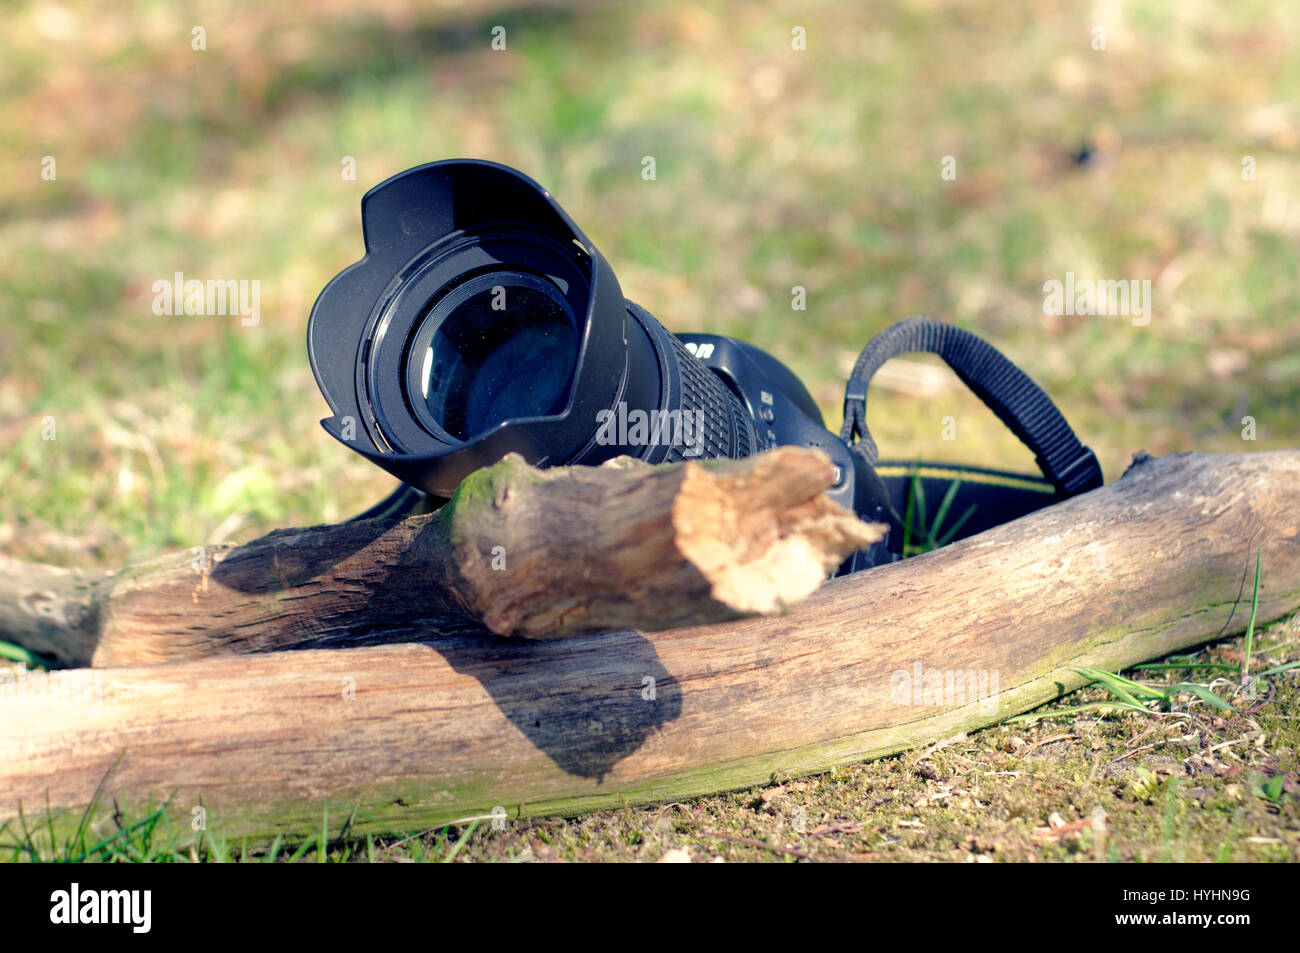 Nikon d5100 hi-res stock photography and images - Alamy